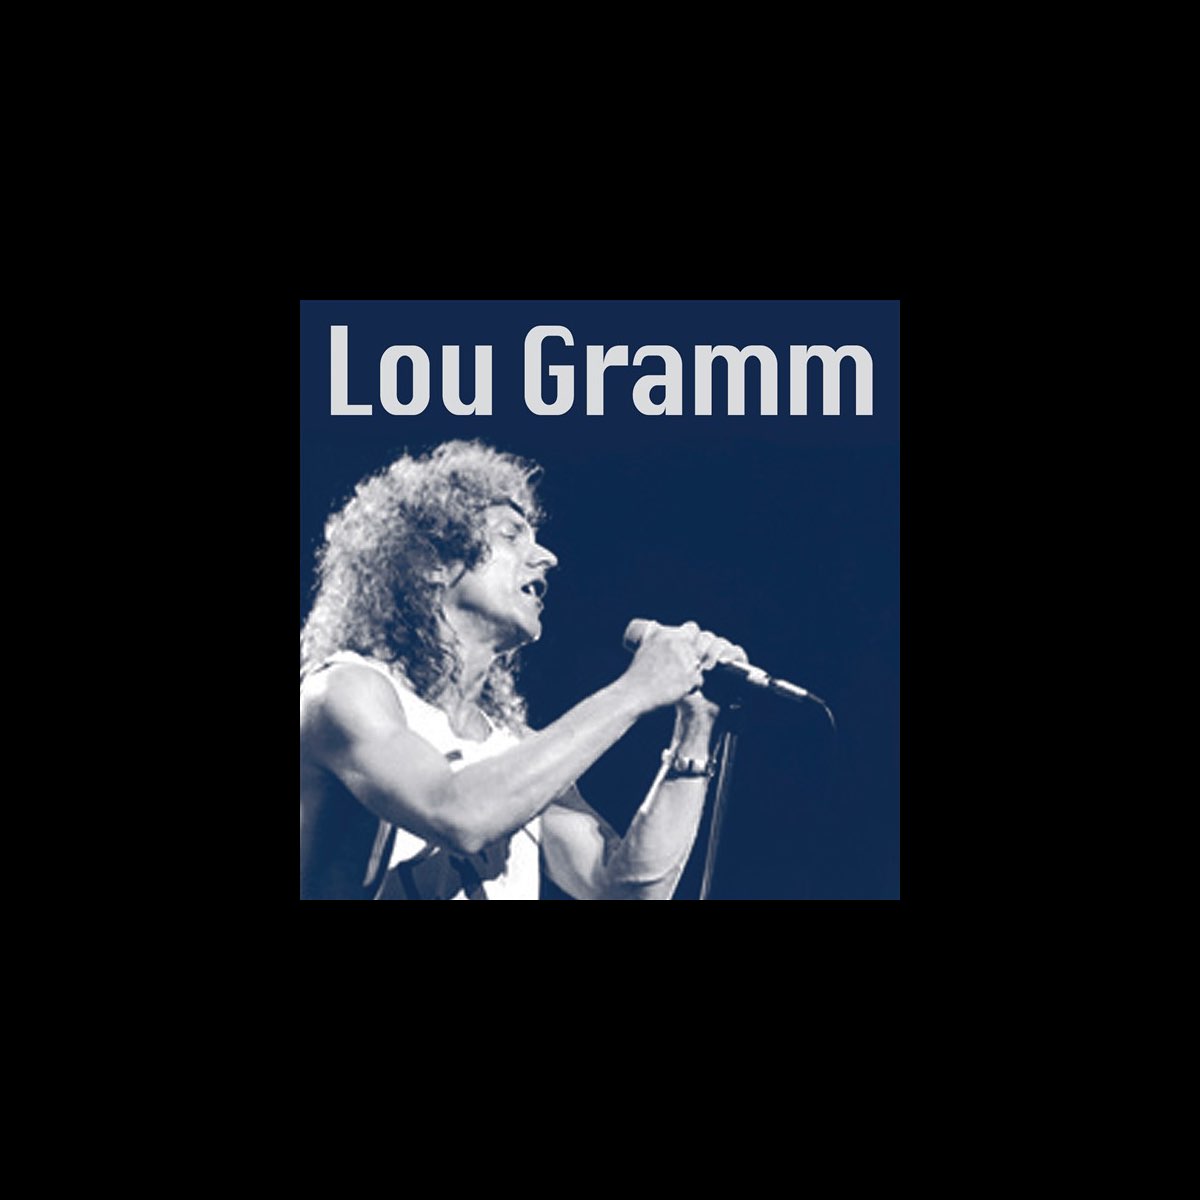 ‎Lou Gramm - Album by Lou Gramm - Apple Music